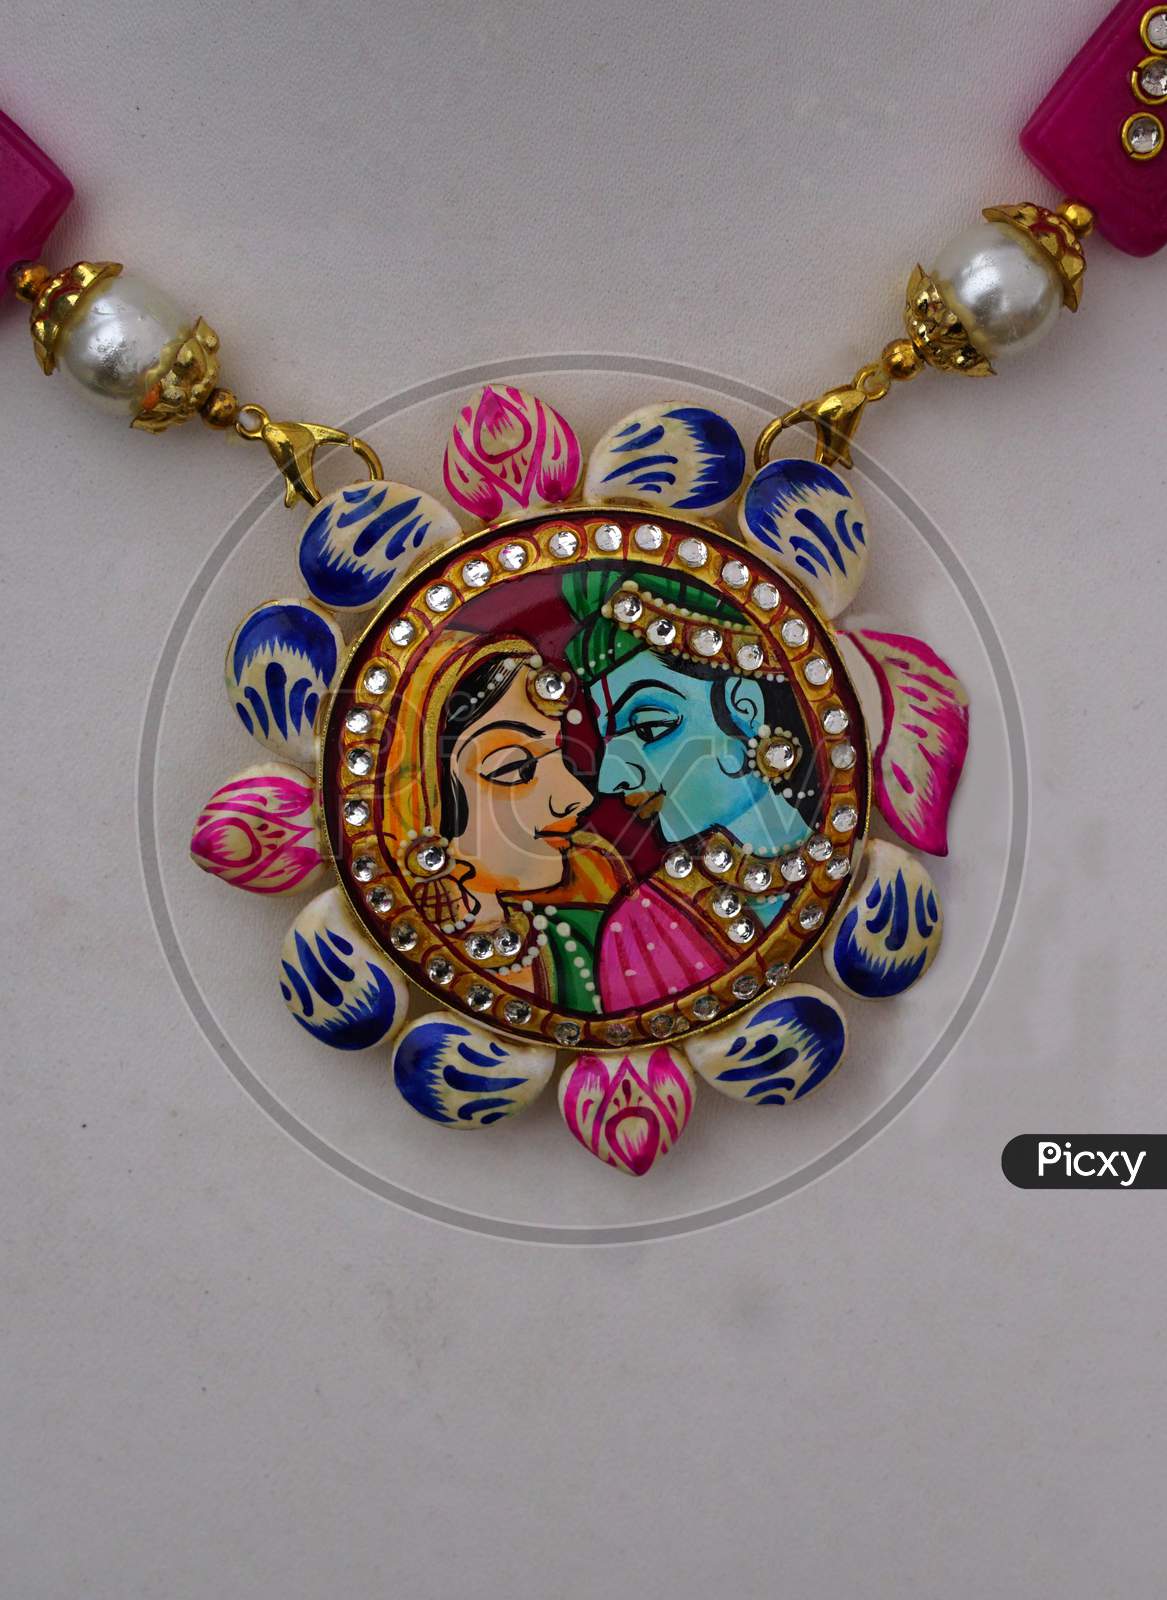 Ndian Hindu Woman Jewelry Locket With Krishna And Radha Image On Locket Of Necklace